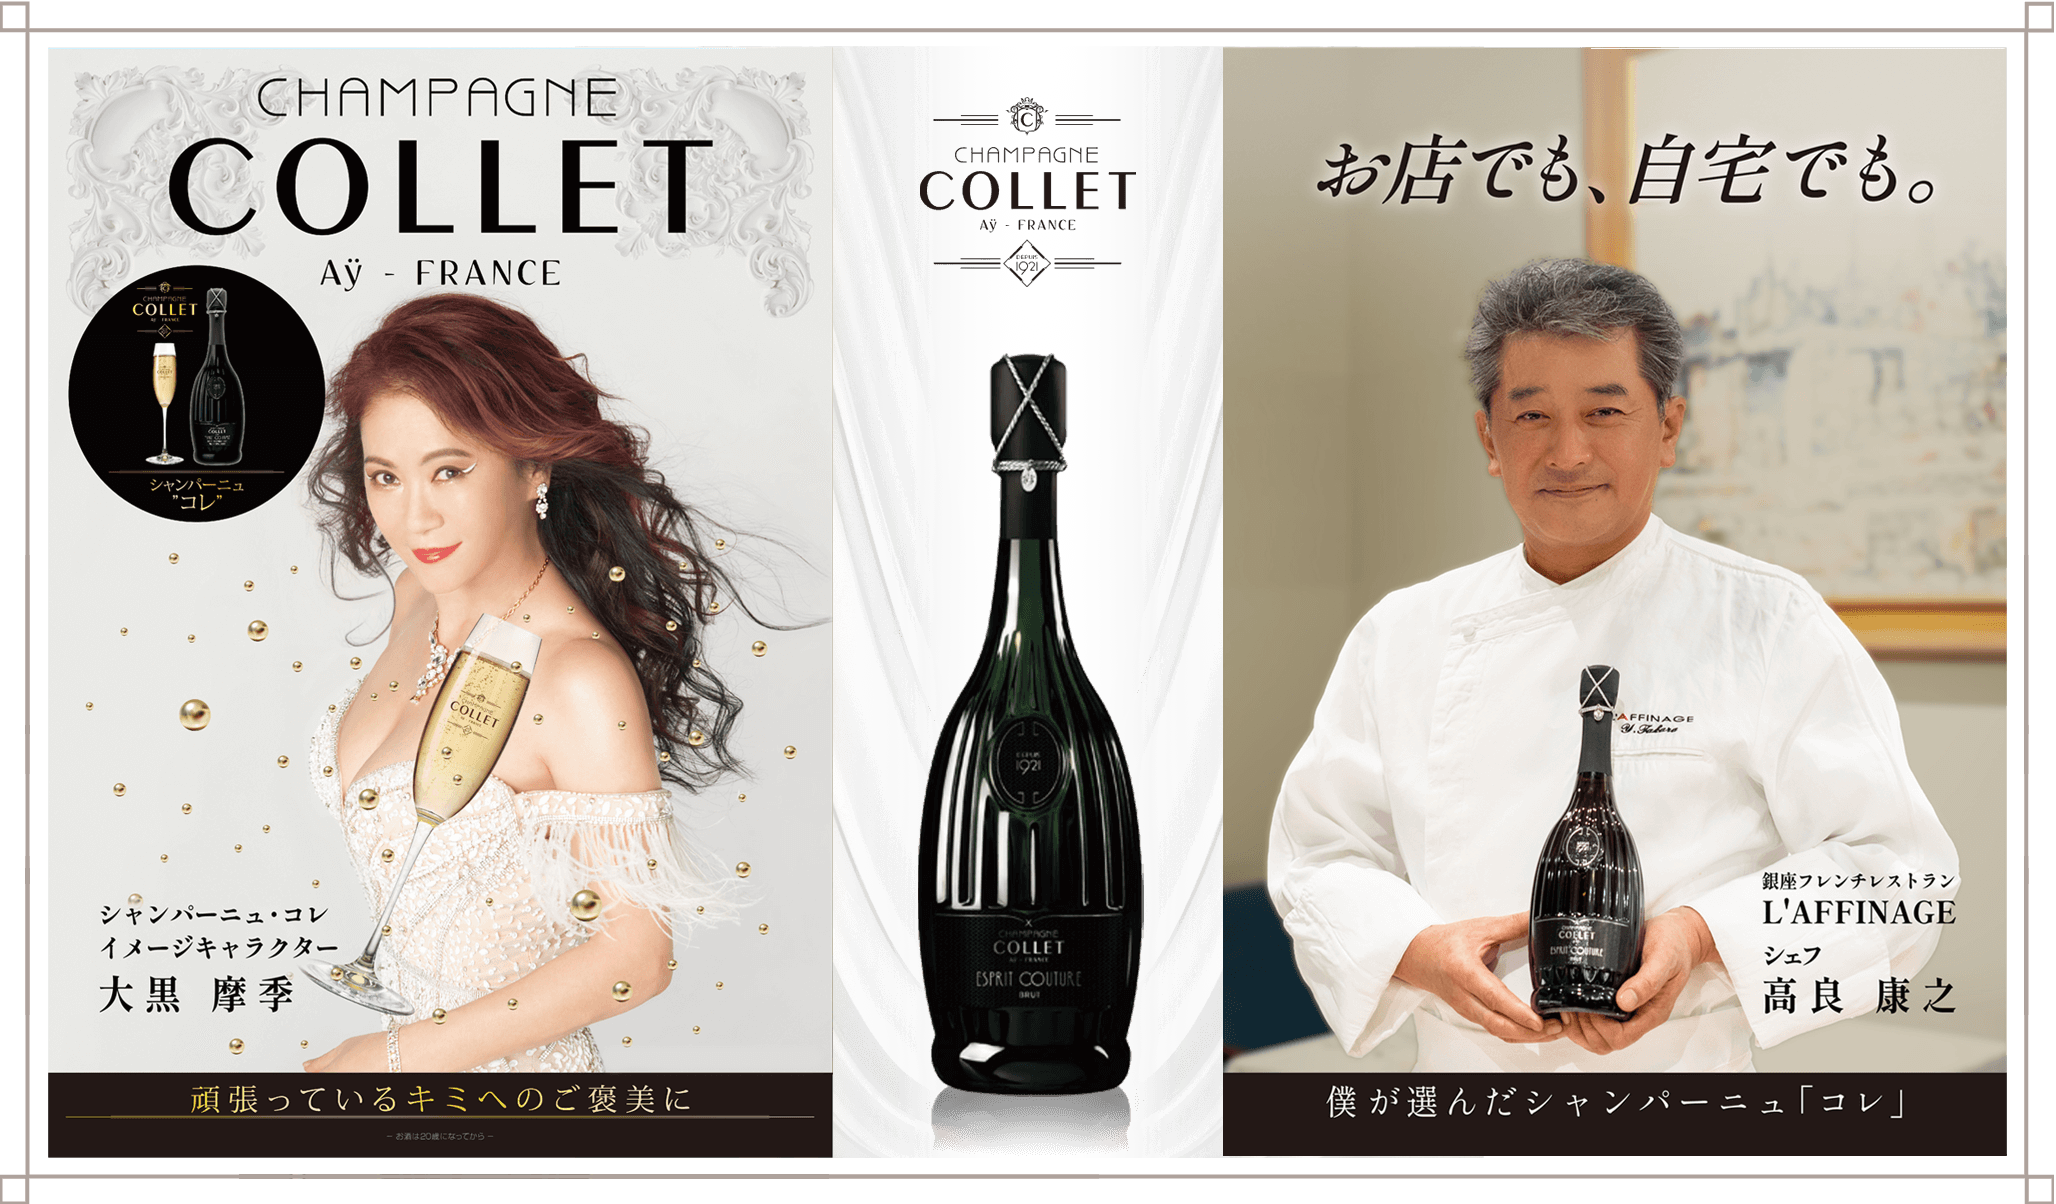 CHAMPAGNE COLLET シャンパン愛好家のために造られた、シャンパーニュ「コレ」日本サイト